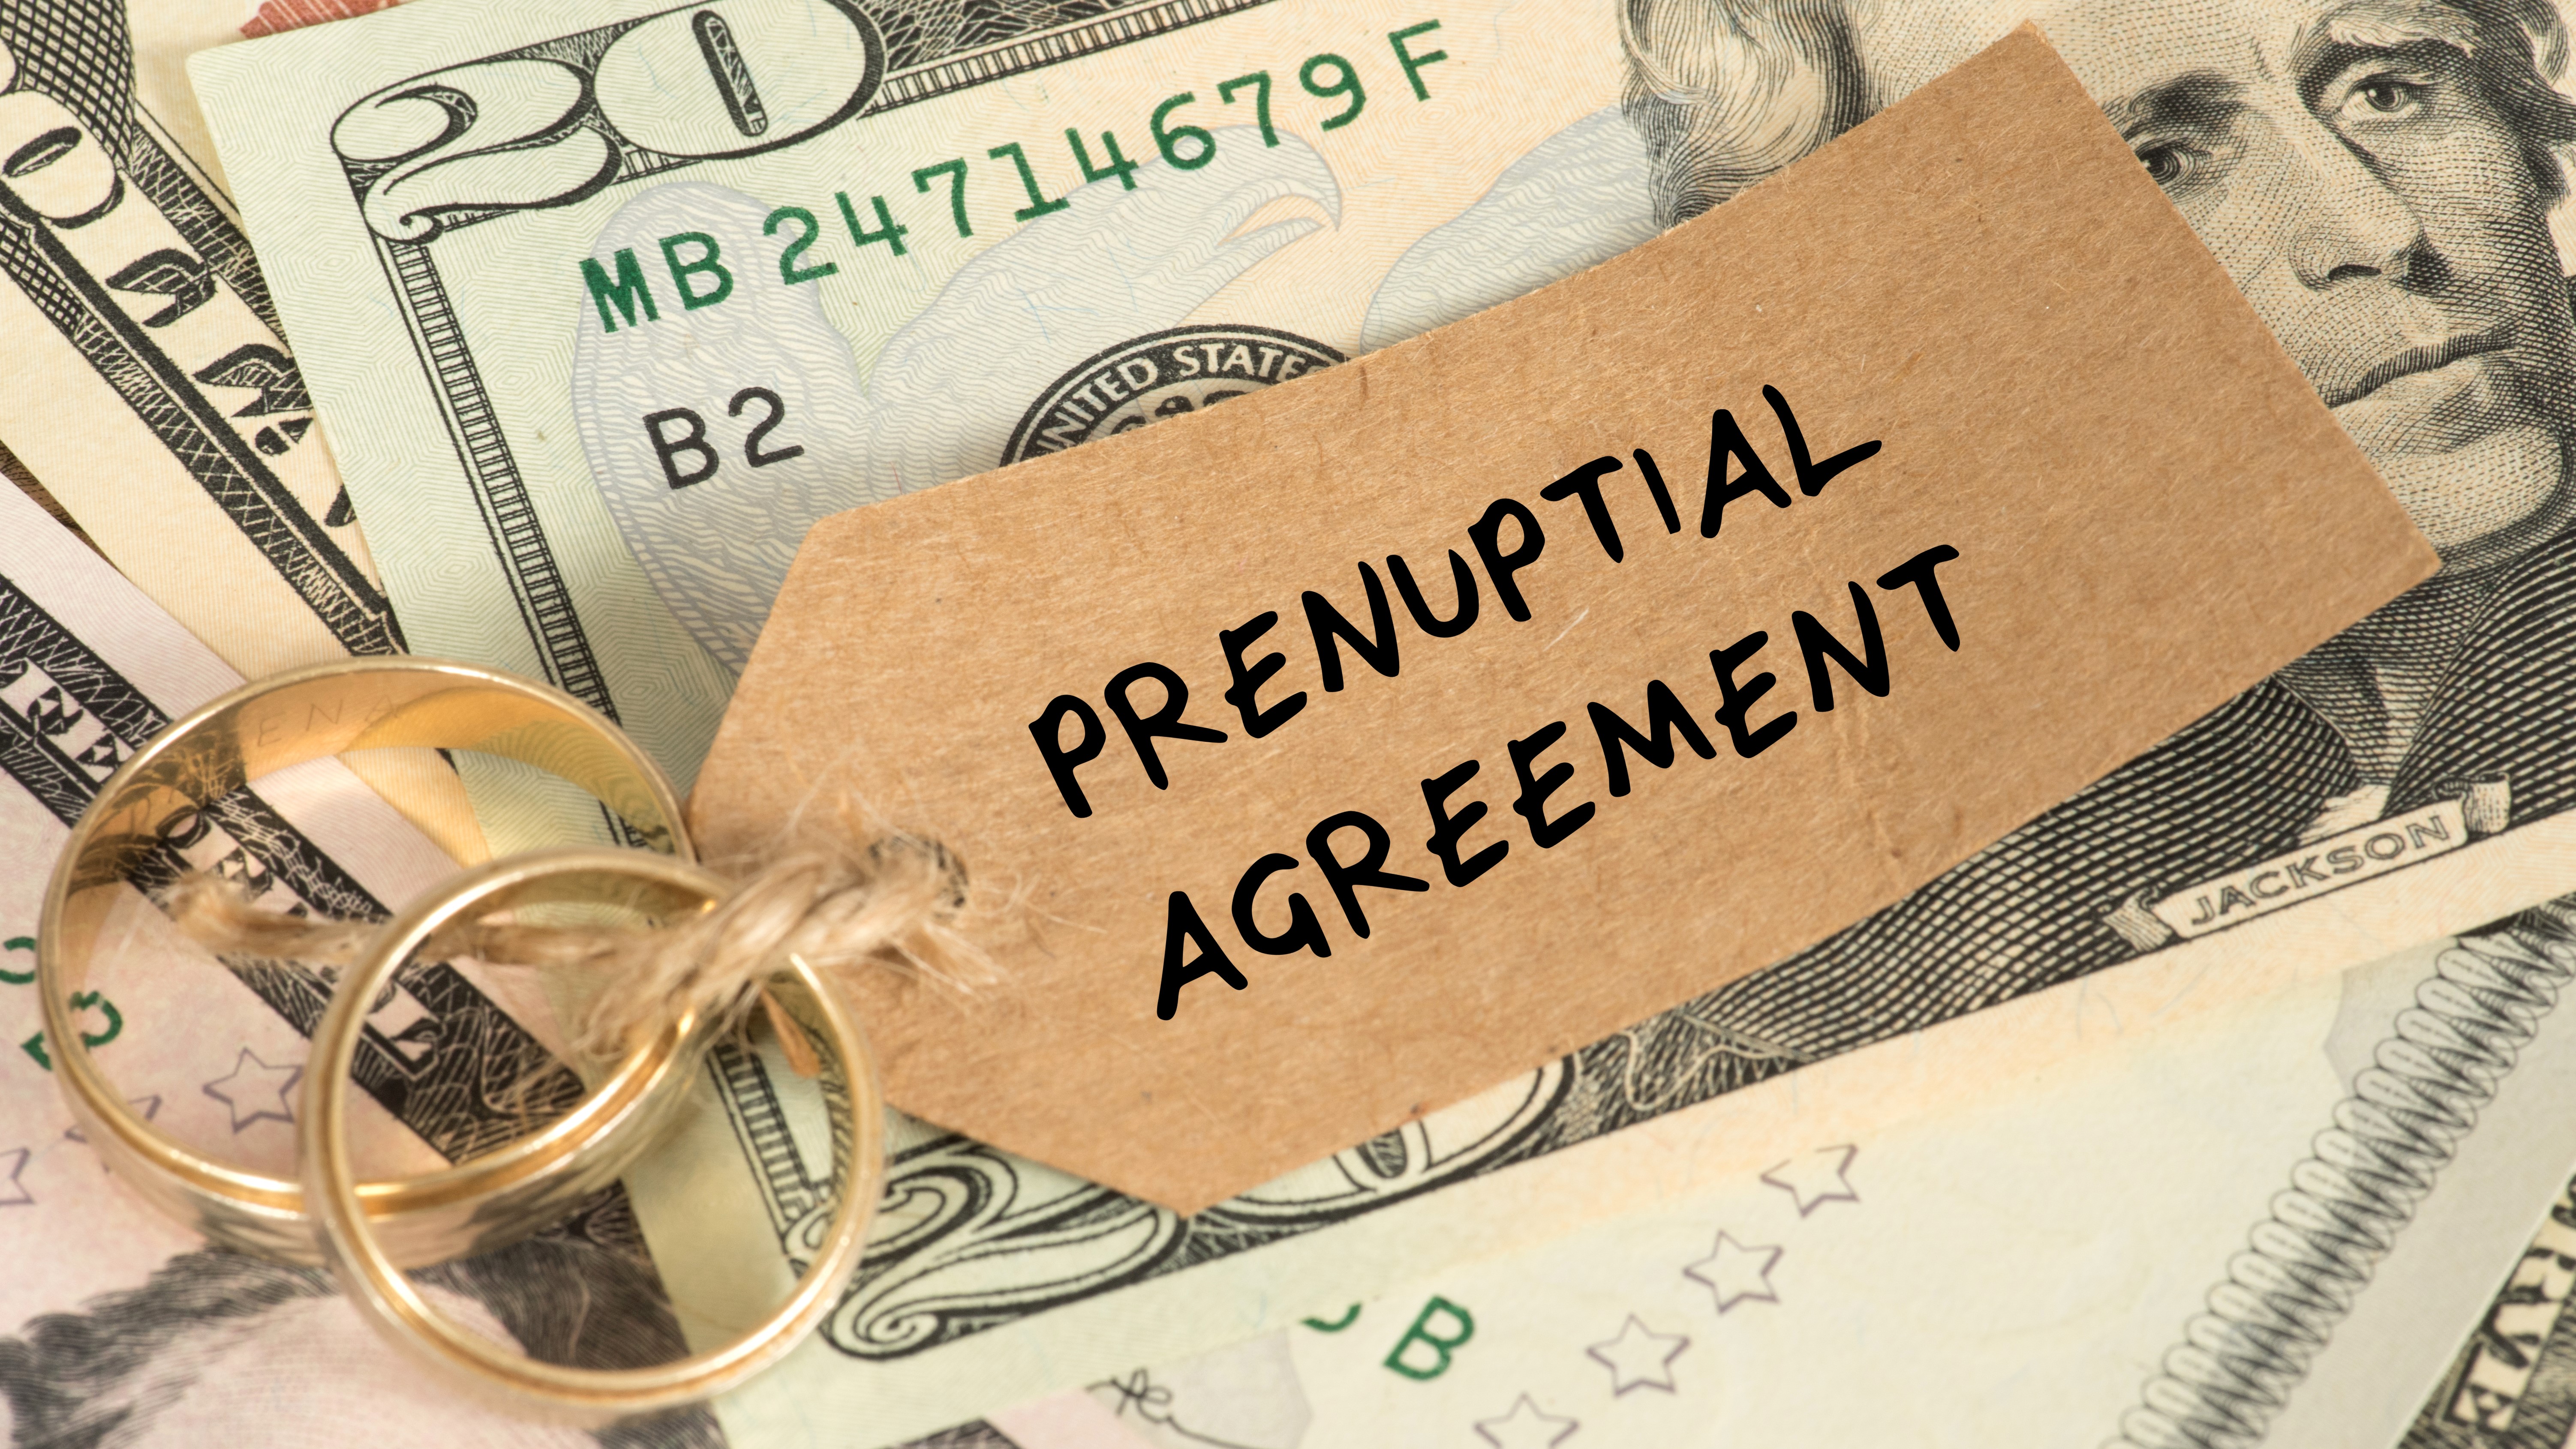 APEG Prenuptial Agreements